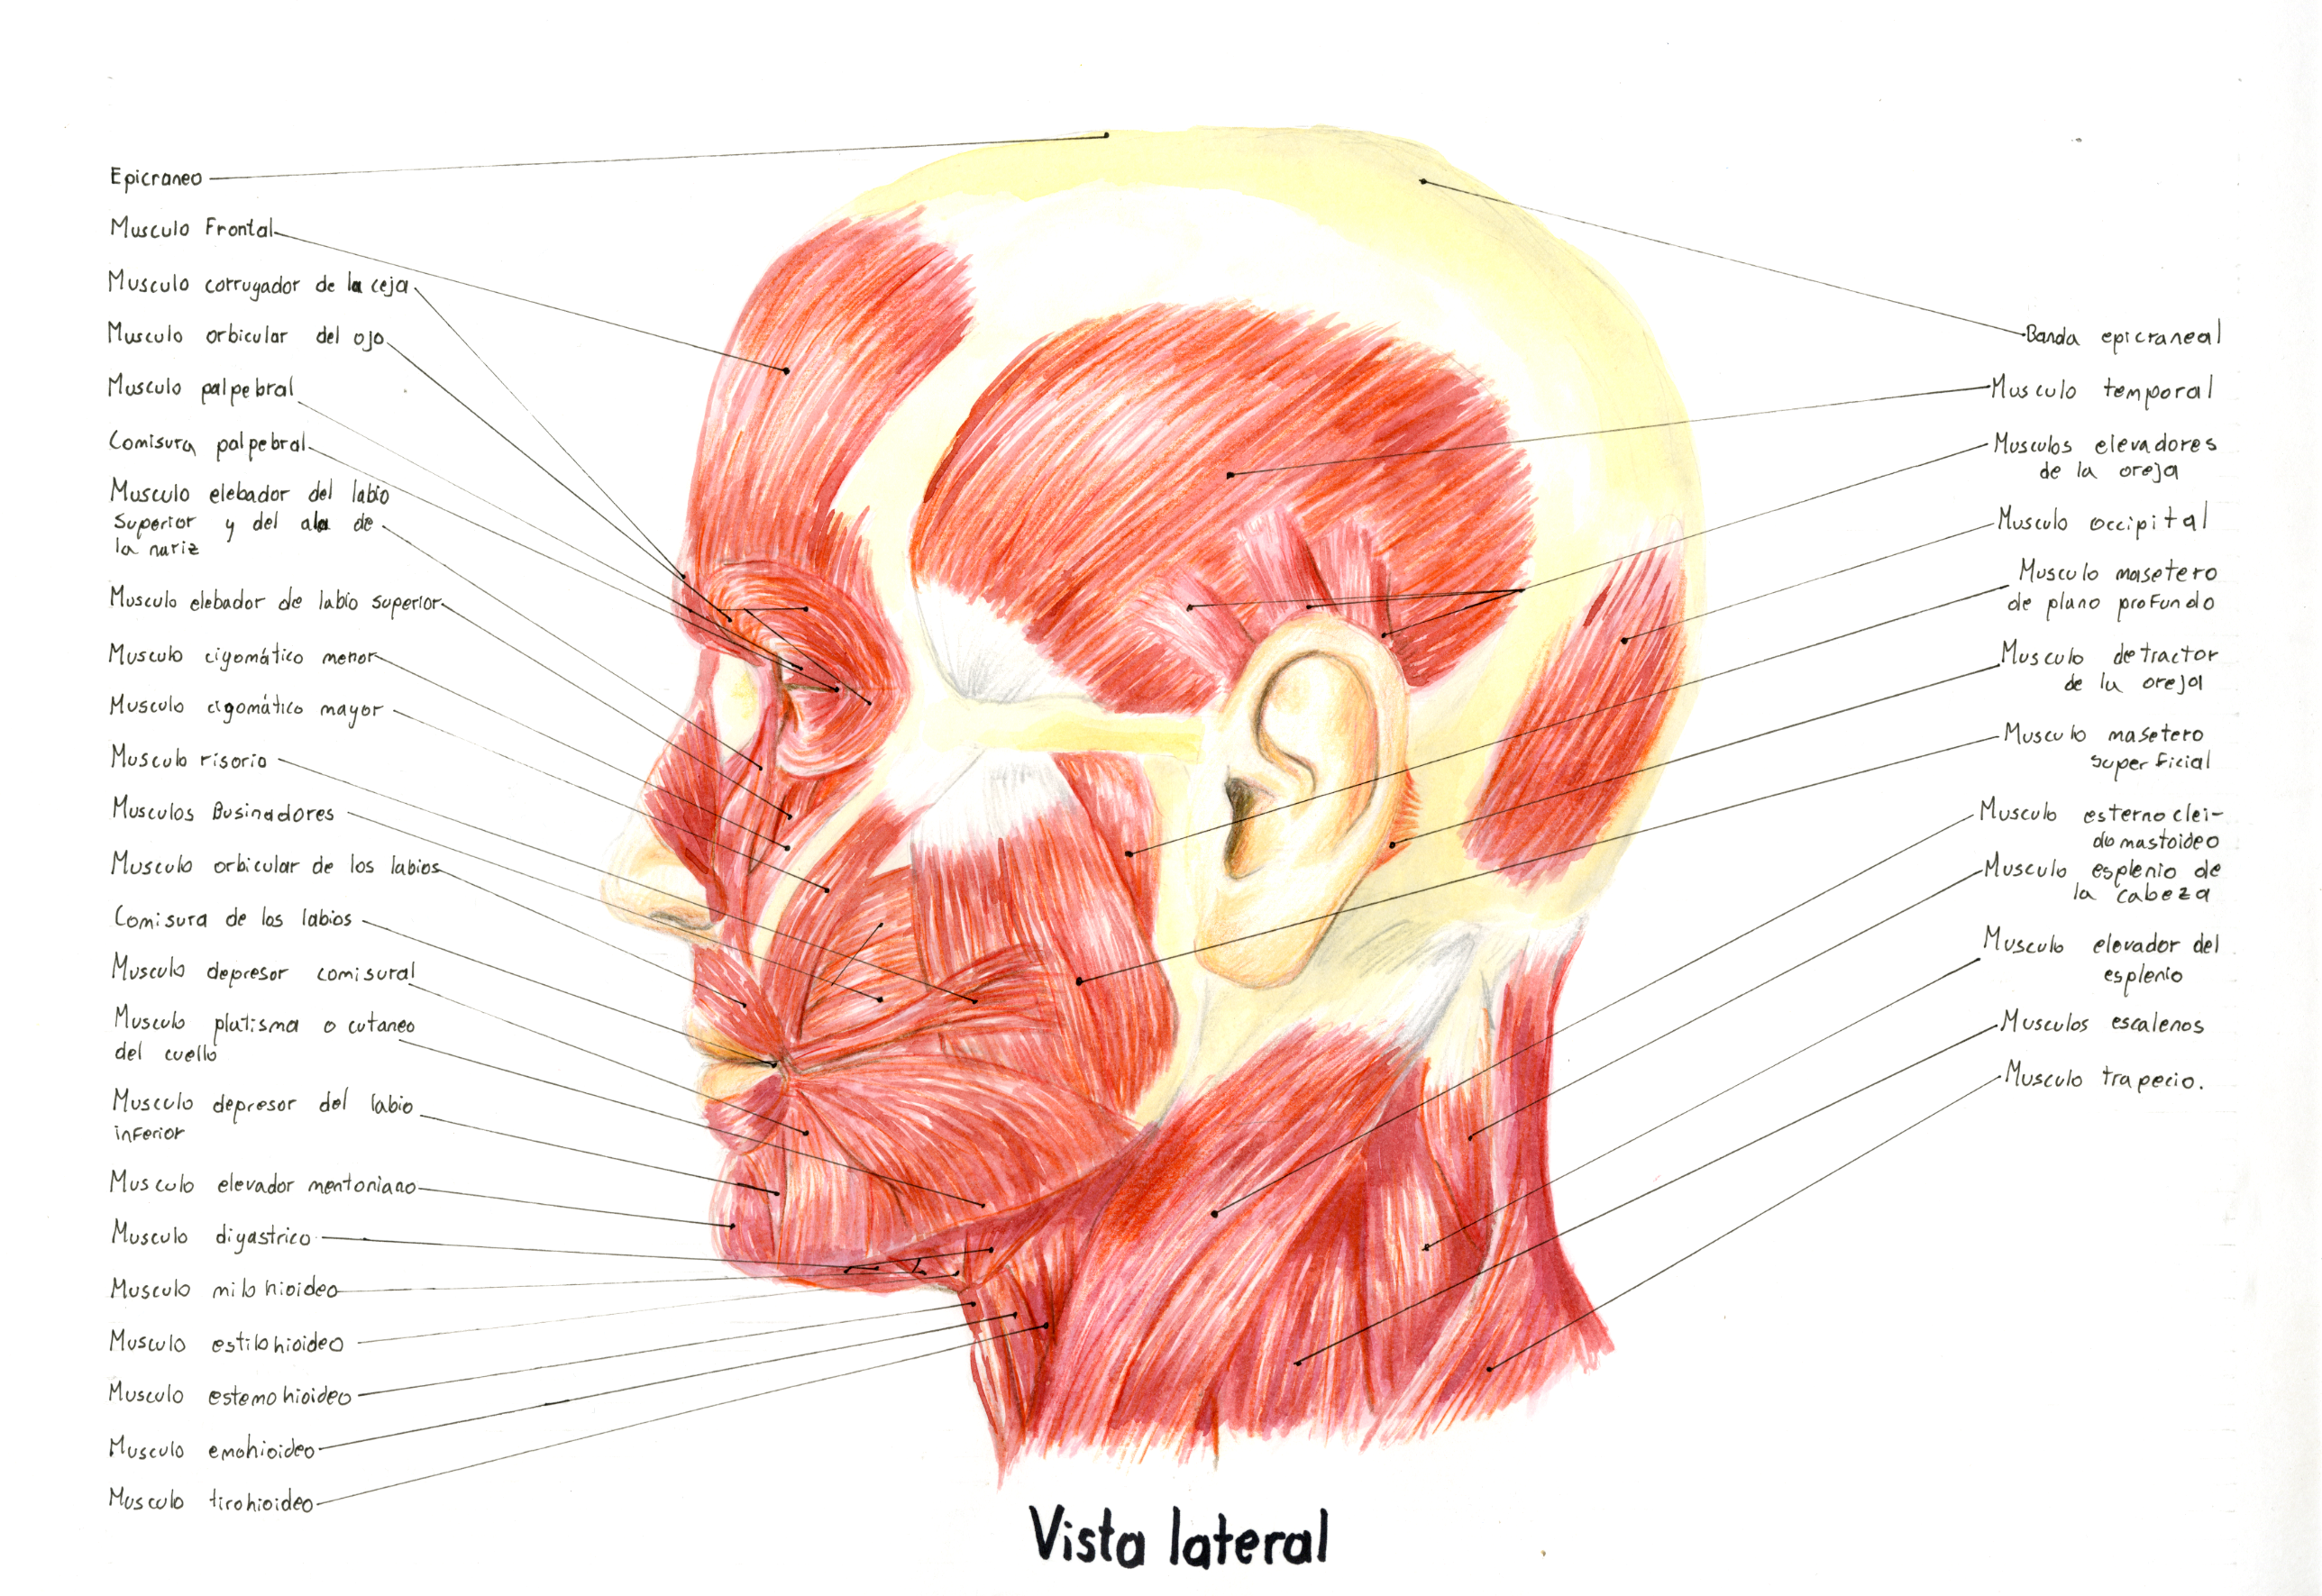 musculos de la cabeza vista lateral by LeoPort on DeviantArt